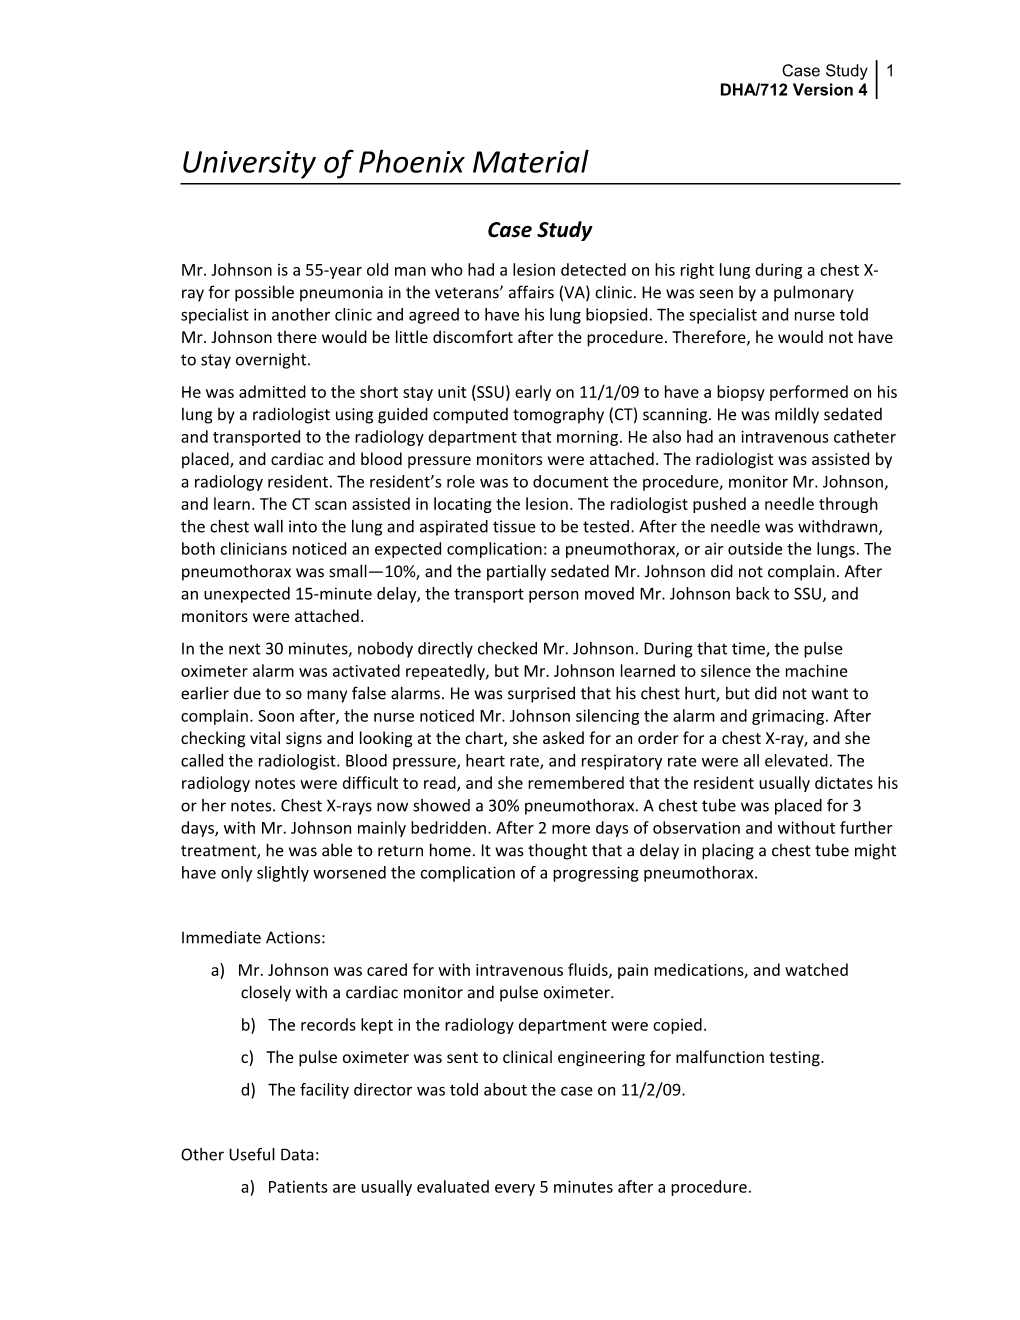 University of Phoenix Material s4